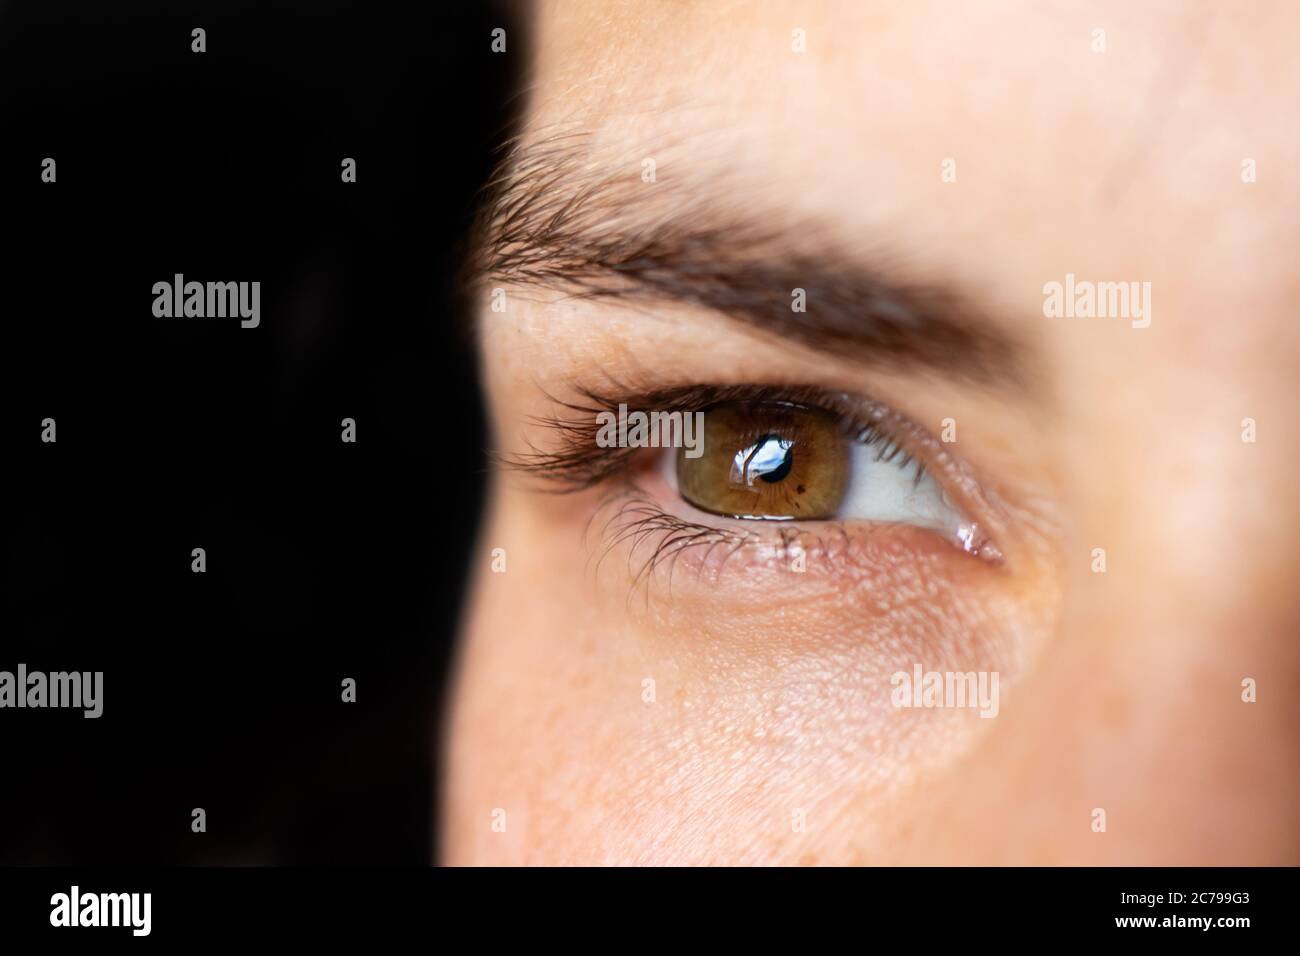 Macro eye photo. Keratoconus - eye disease, thinning of the cornea in the form of a cone. The cornea plastic Stock Photo